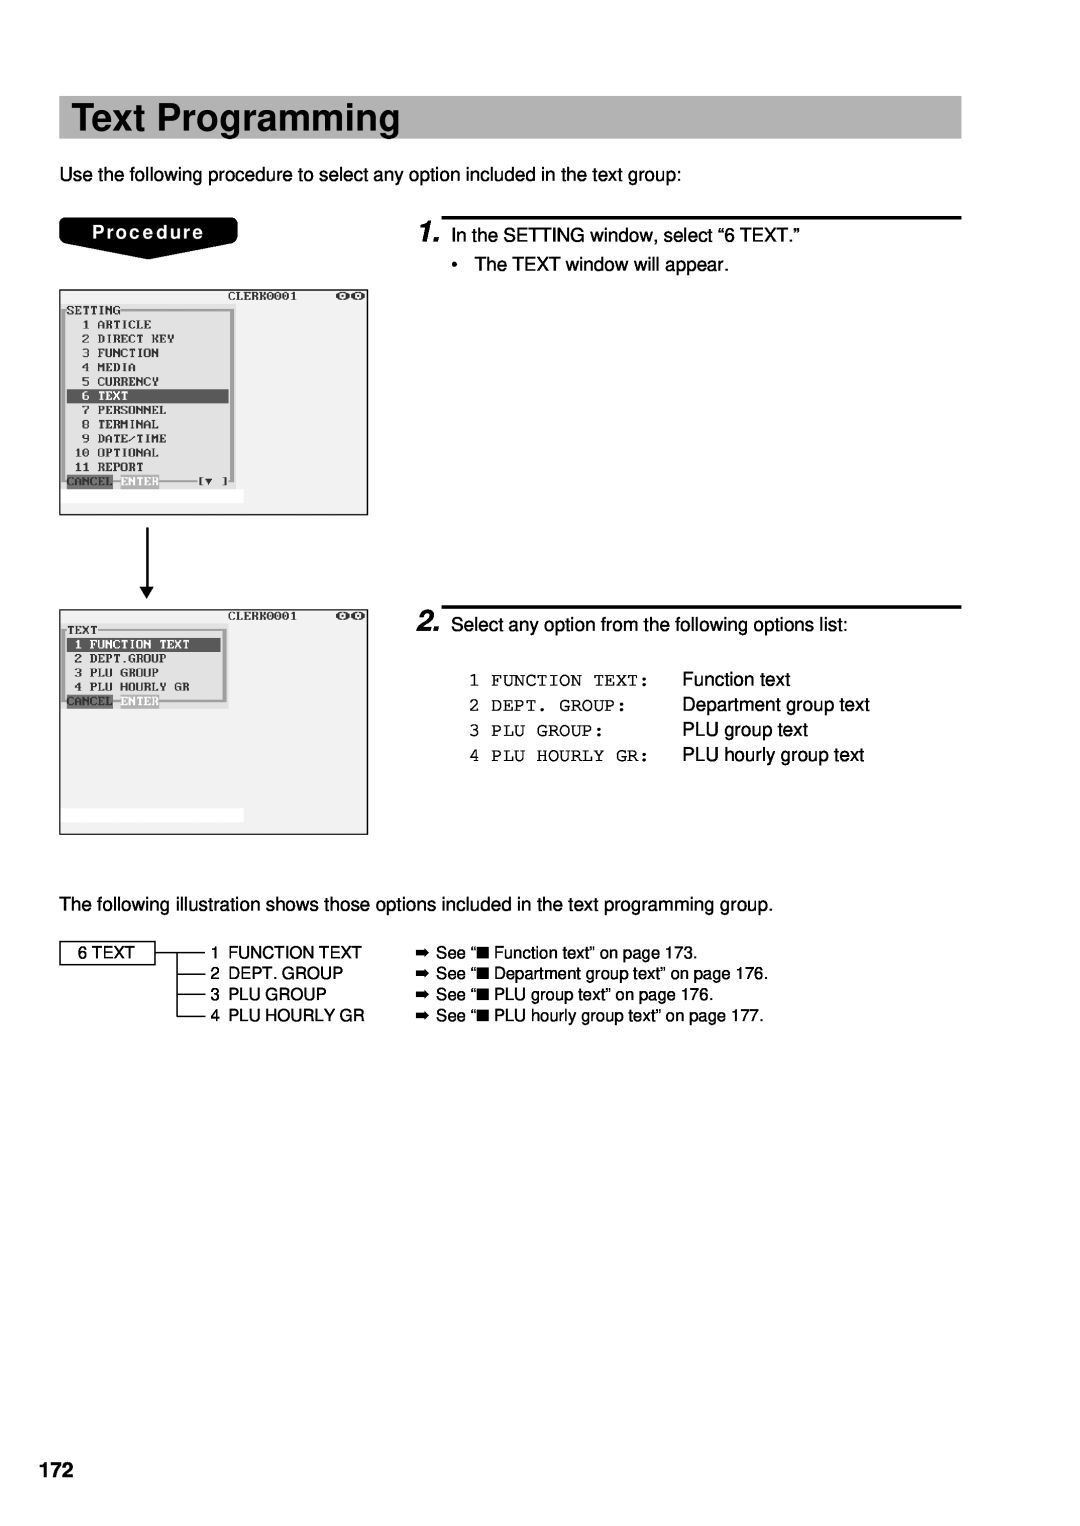 Sharp UP-3300 instruction manual Text Programming, Procedure 